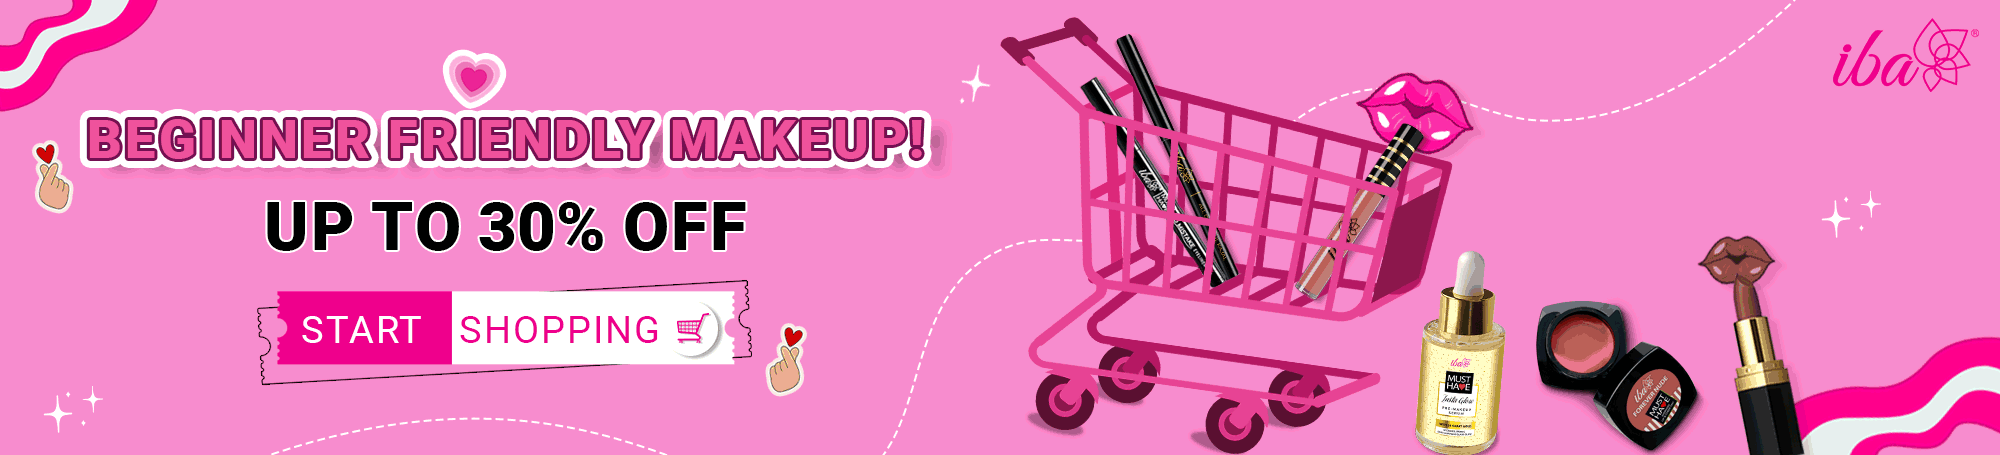 Discount on Beginners Makeup